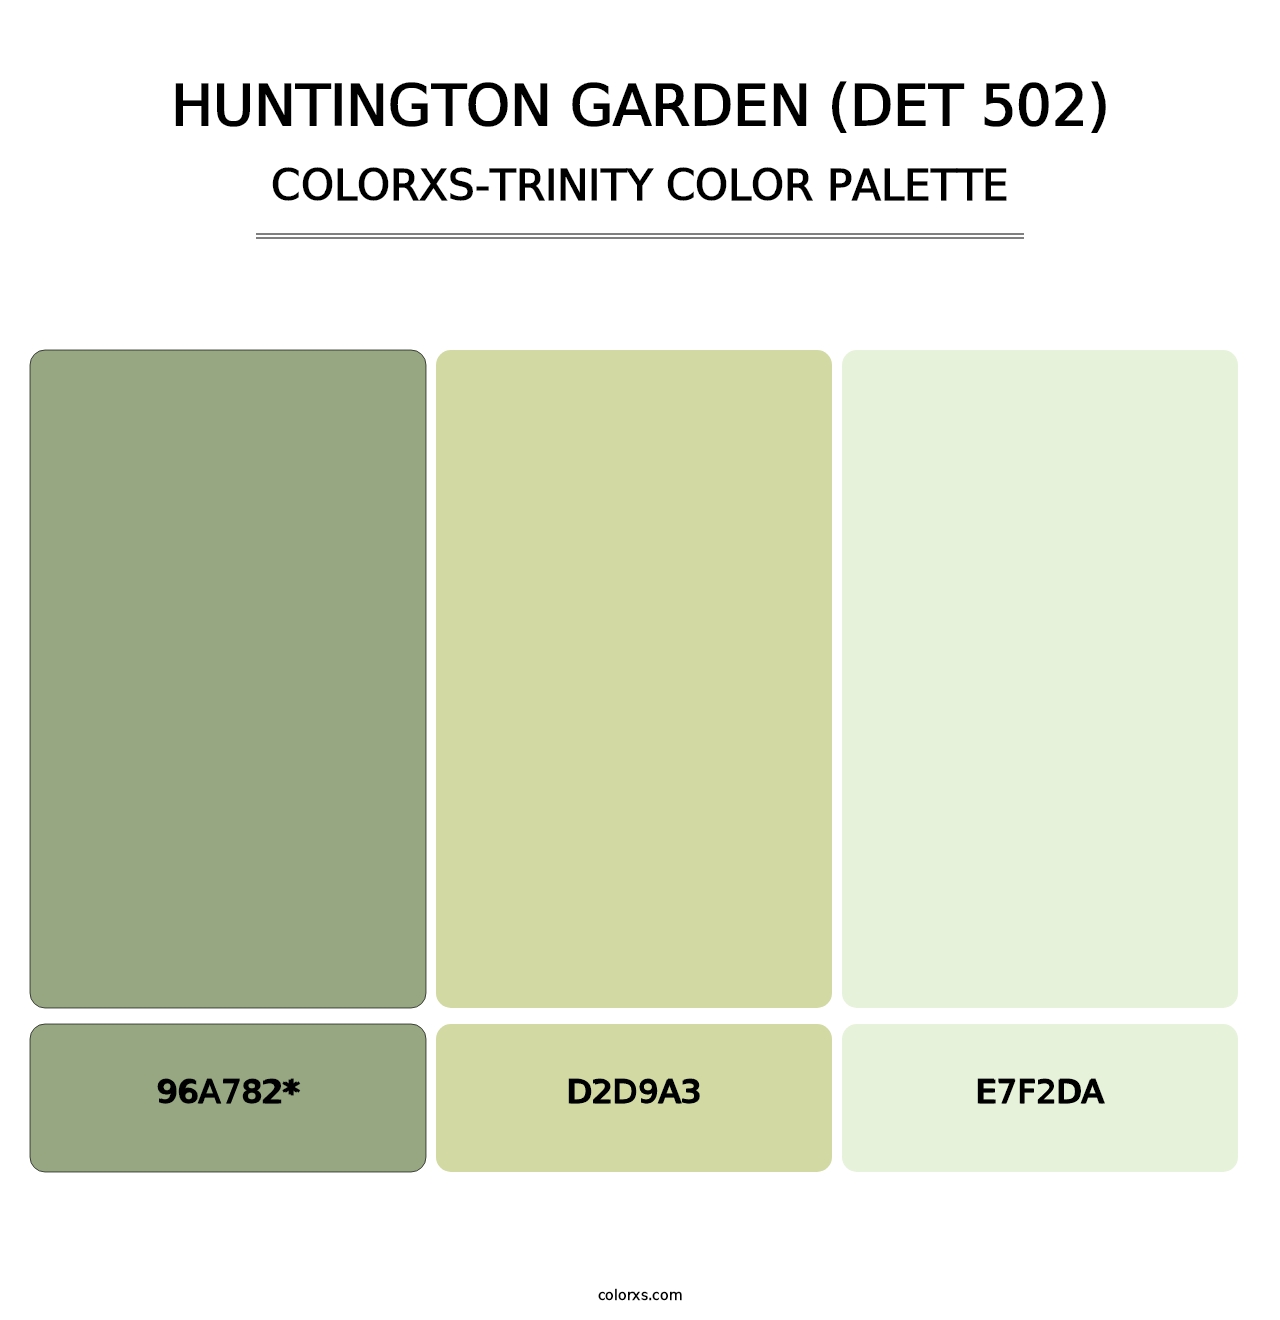 Huntington Garden (DET 502) - Colorxs Trinity Palette